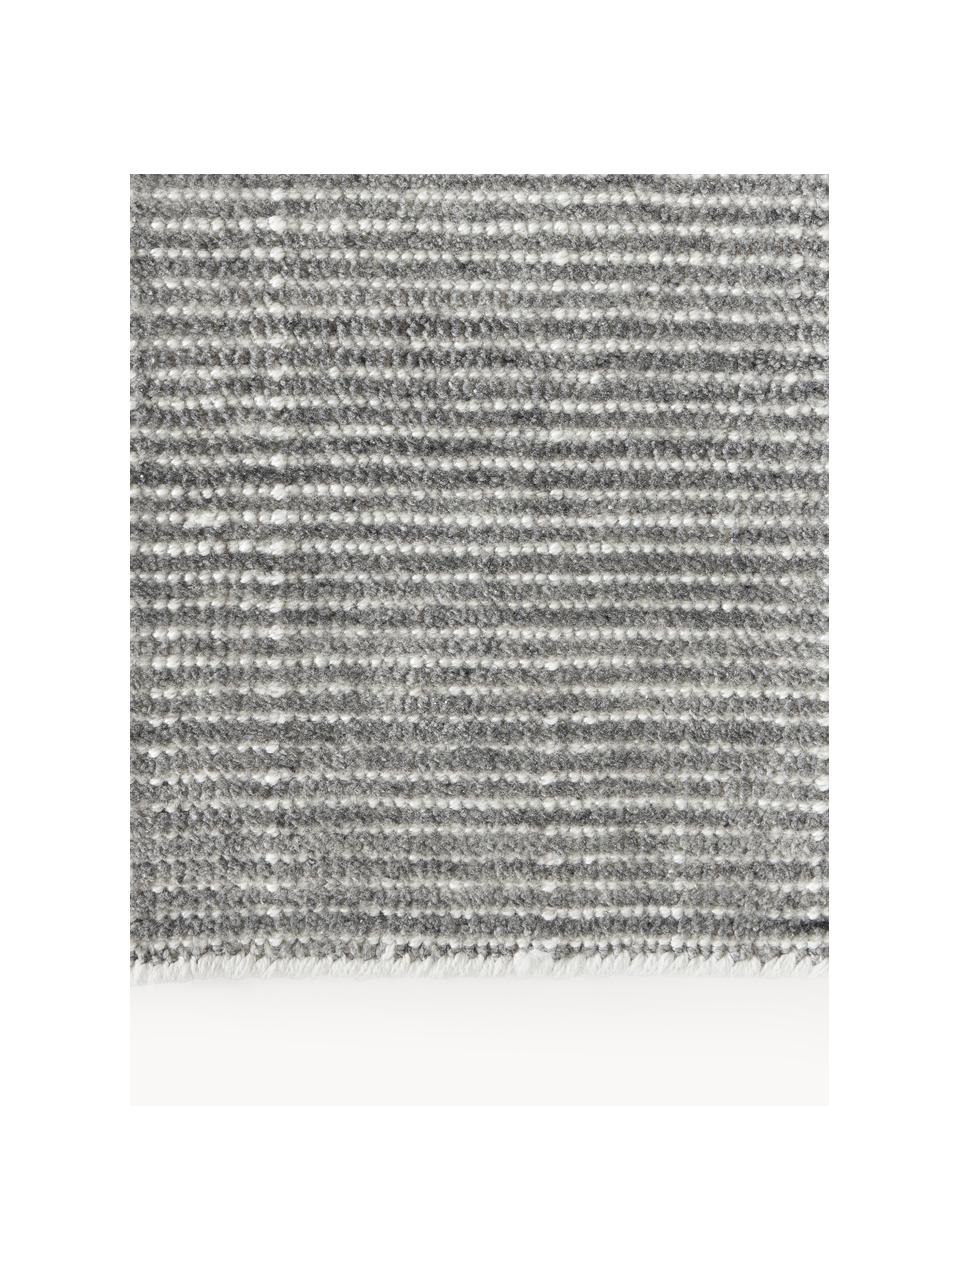 Handgewebter Kurzflor-Teppich Willow, 100% Polyester, GRS-zertifiziert, Grau, Weiß, B 120 x L 180 cm (Größe S)